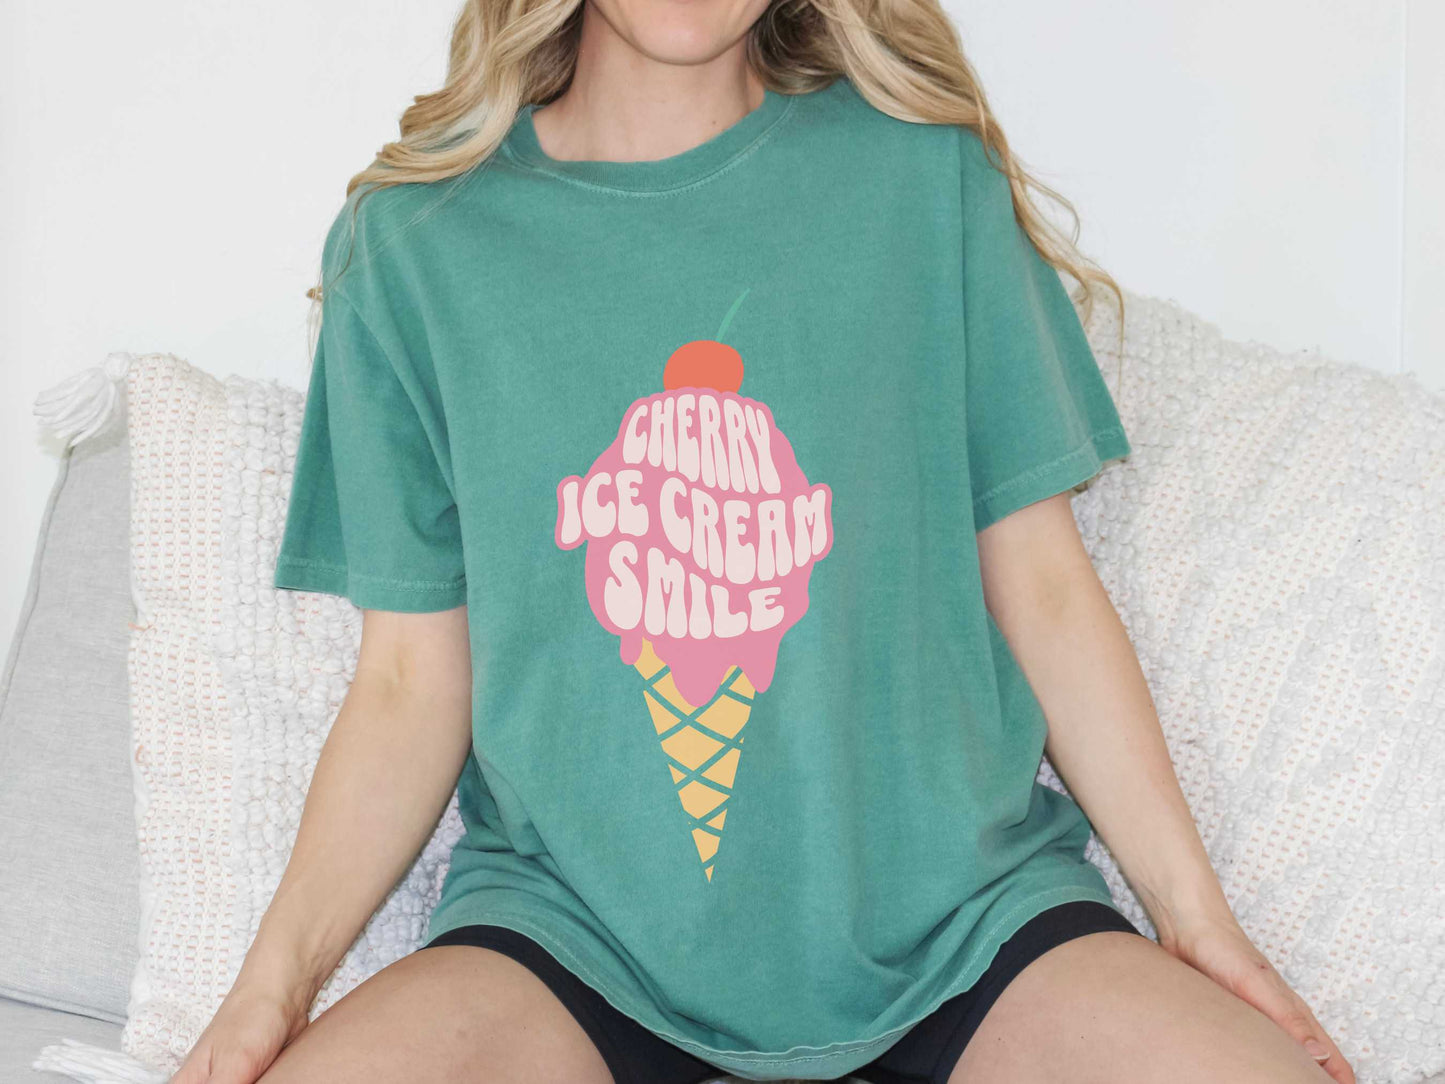 Duran Duran Rio "Cherry Ice Cream Smile" T-Shirt